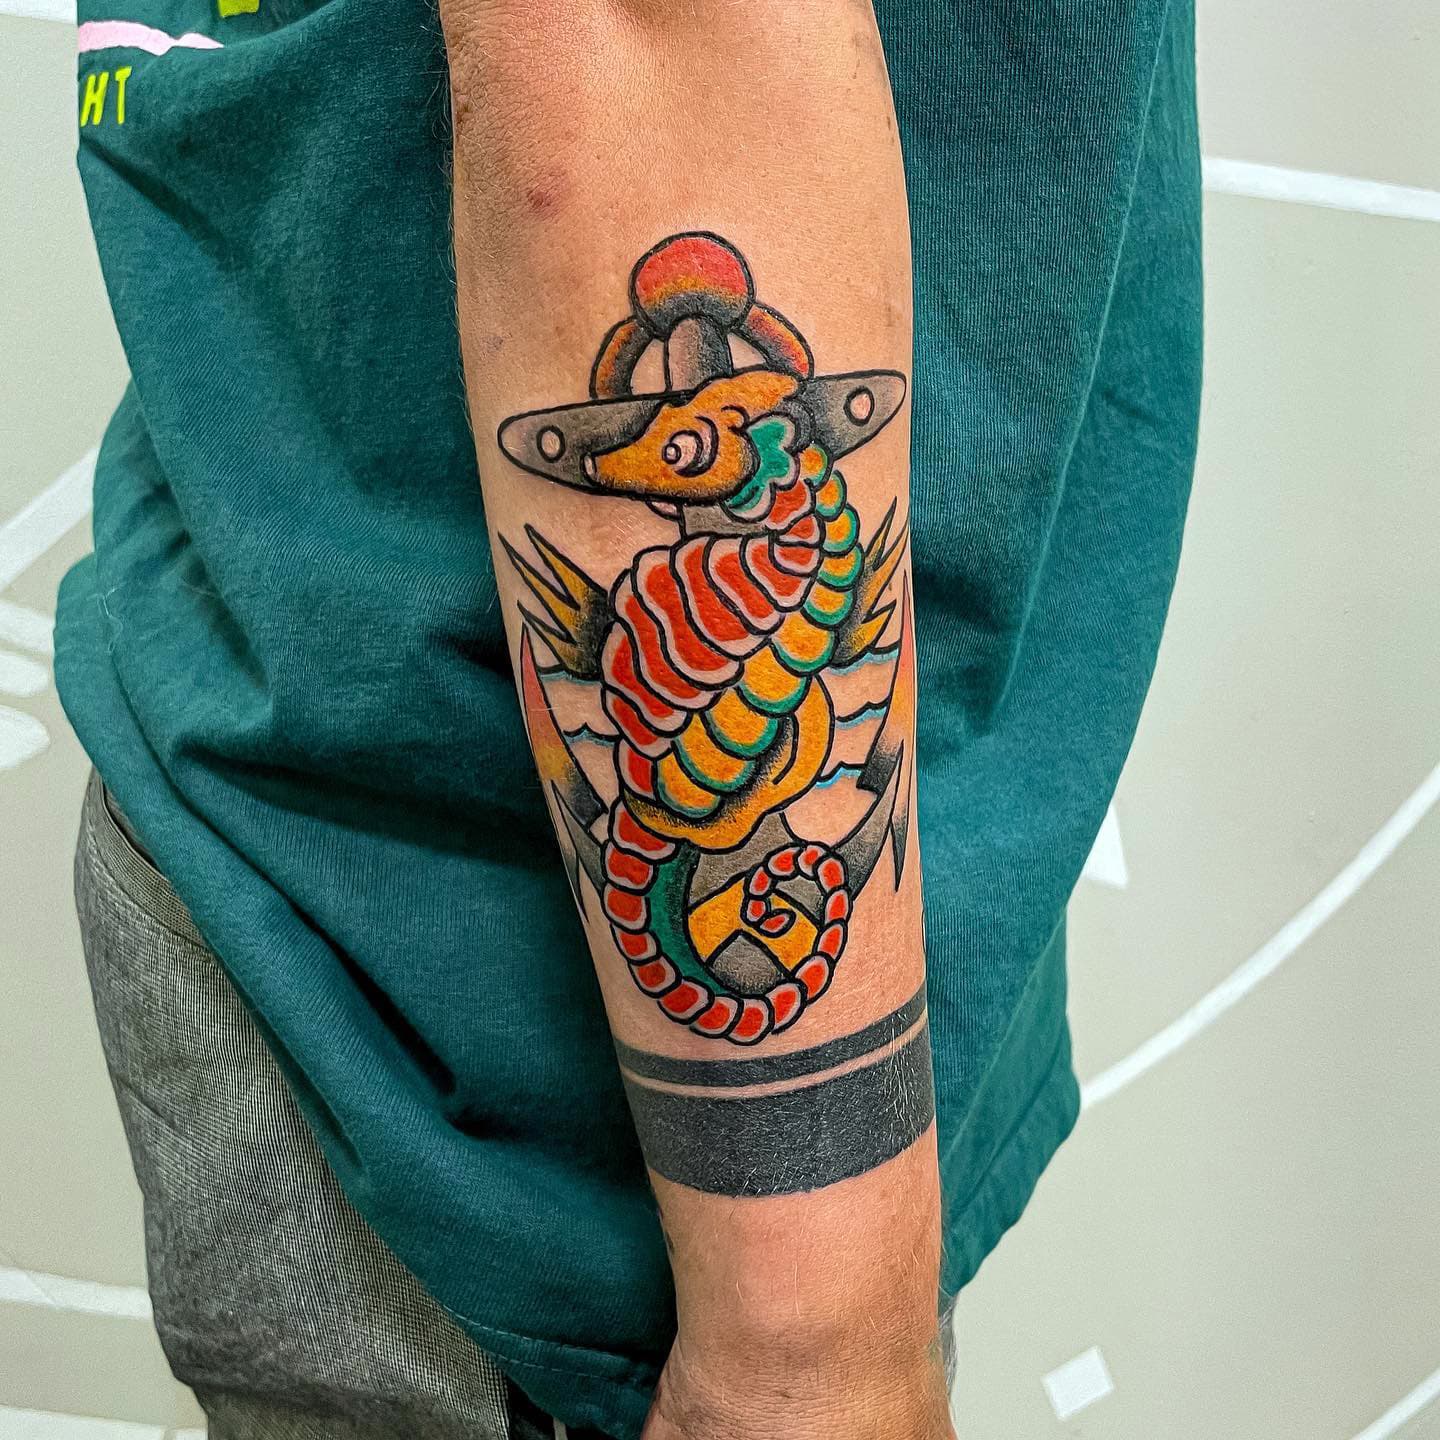 Imágenes de tatuajes de caballitos de mar de colores brillantes 1